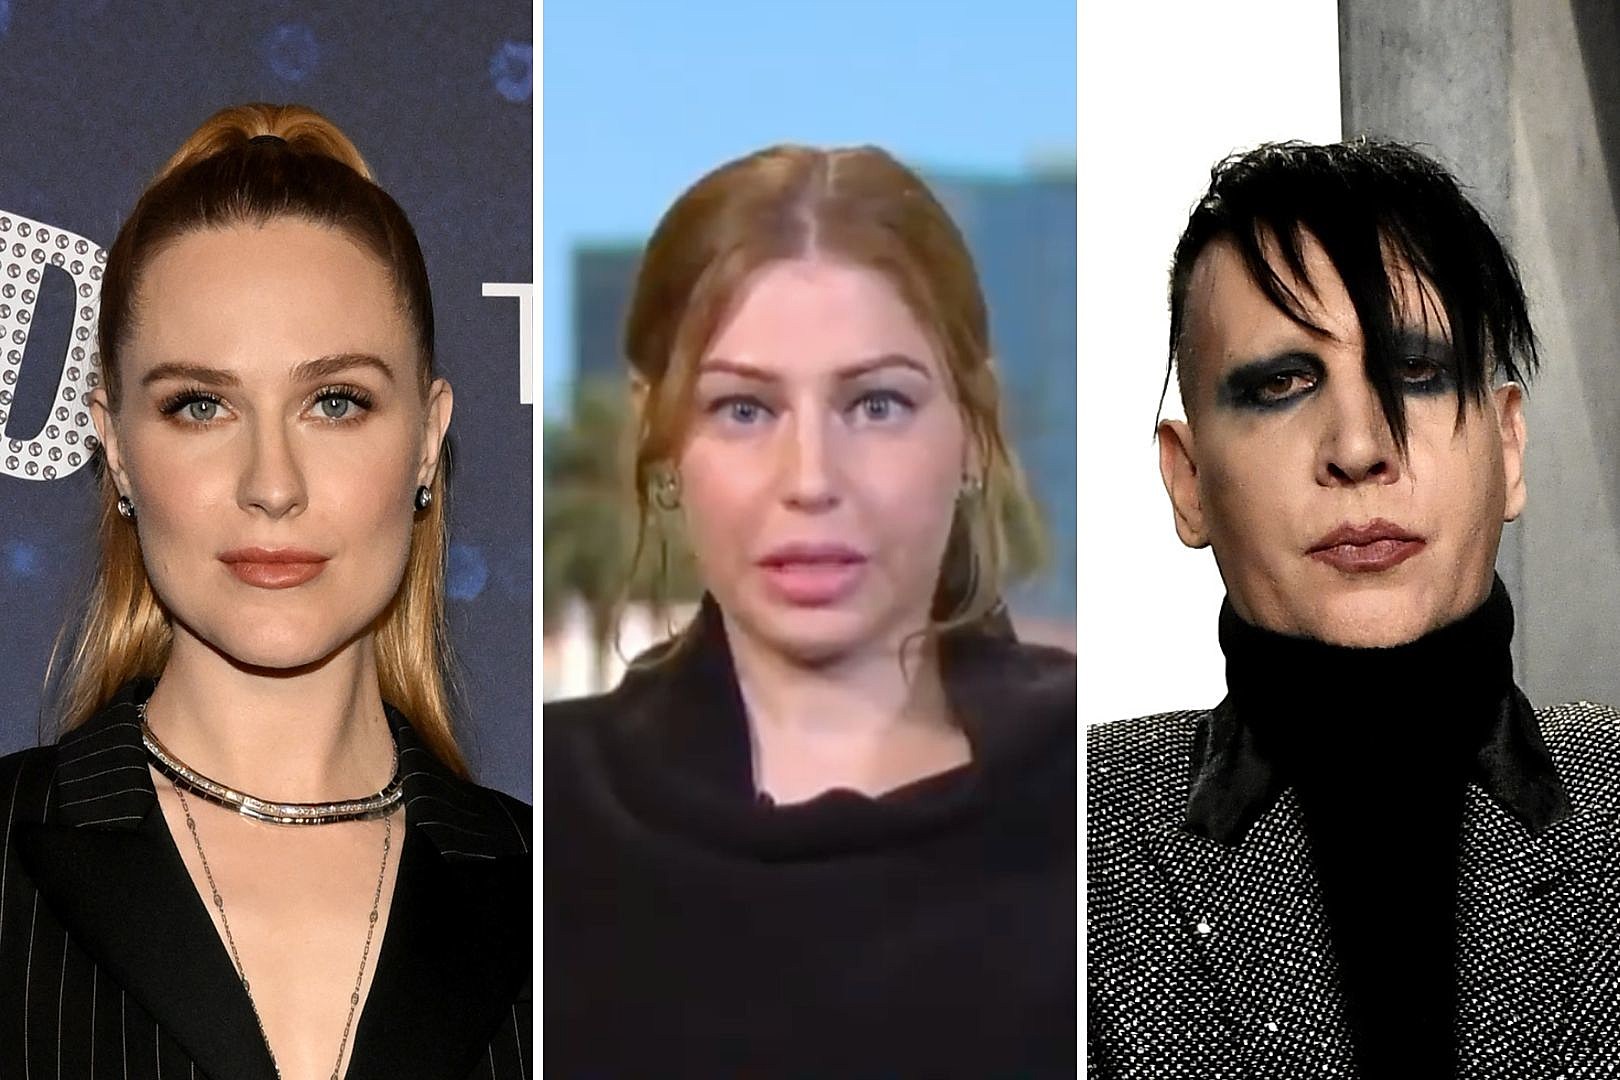 Evan Rachel Wood Denies She Manipulated a Marilyn Manson Accuser